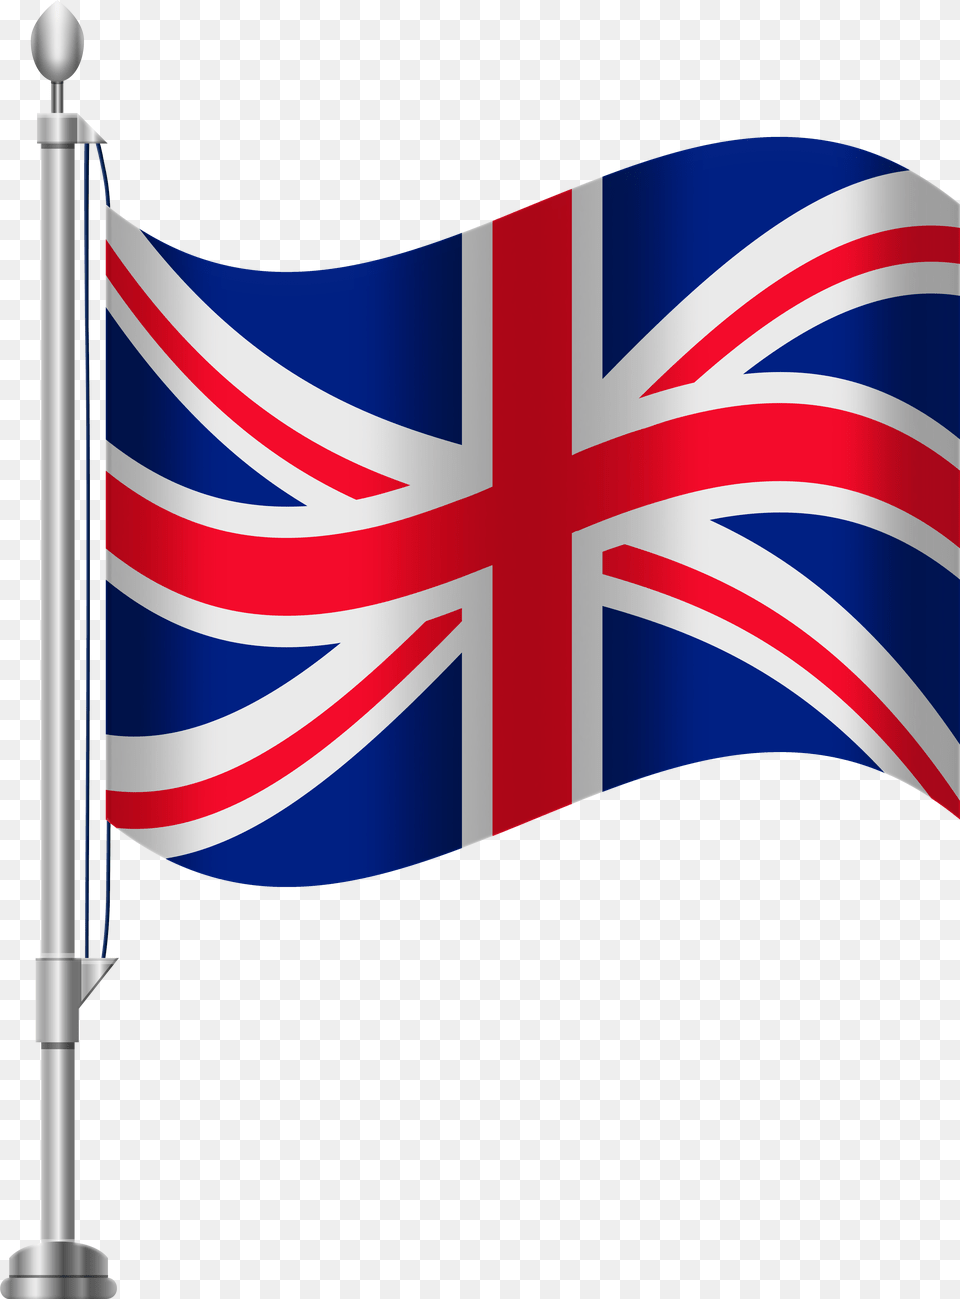 United Kingdom Flag Clip Art, Dynamite, Weapon Png Image